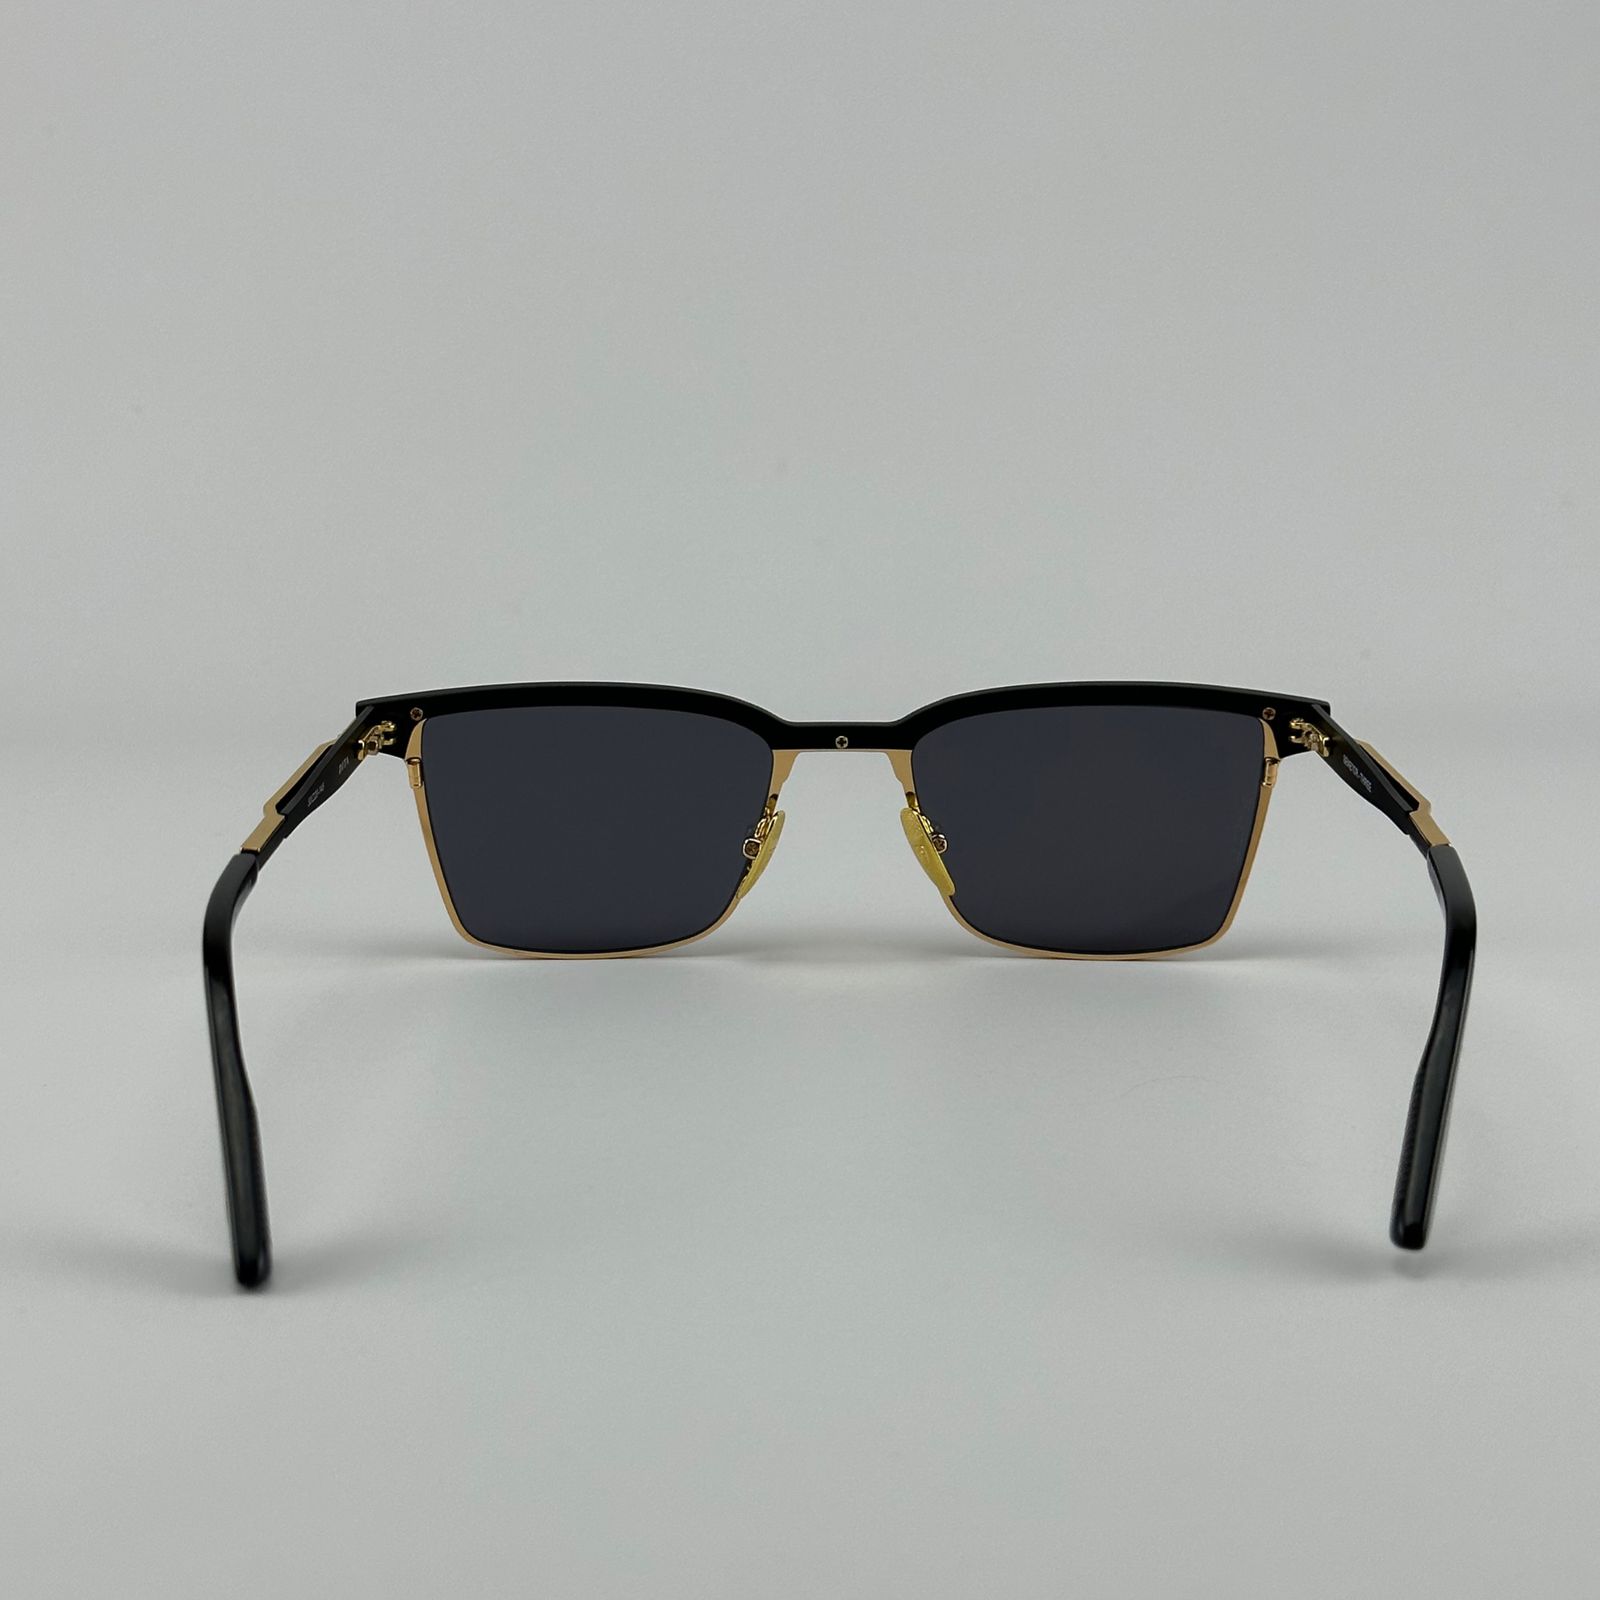 عینک آفتابی دیتا مدل DTX-137 01 SLV-GLD -  - 8